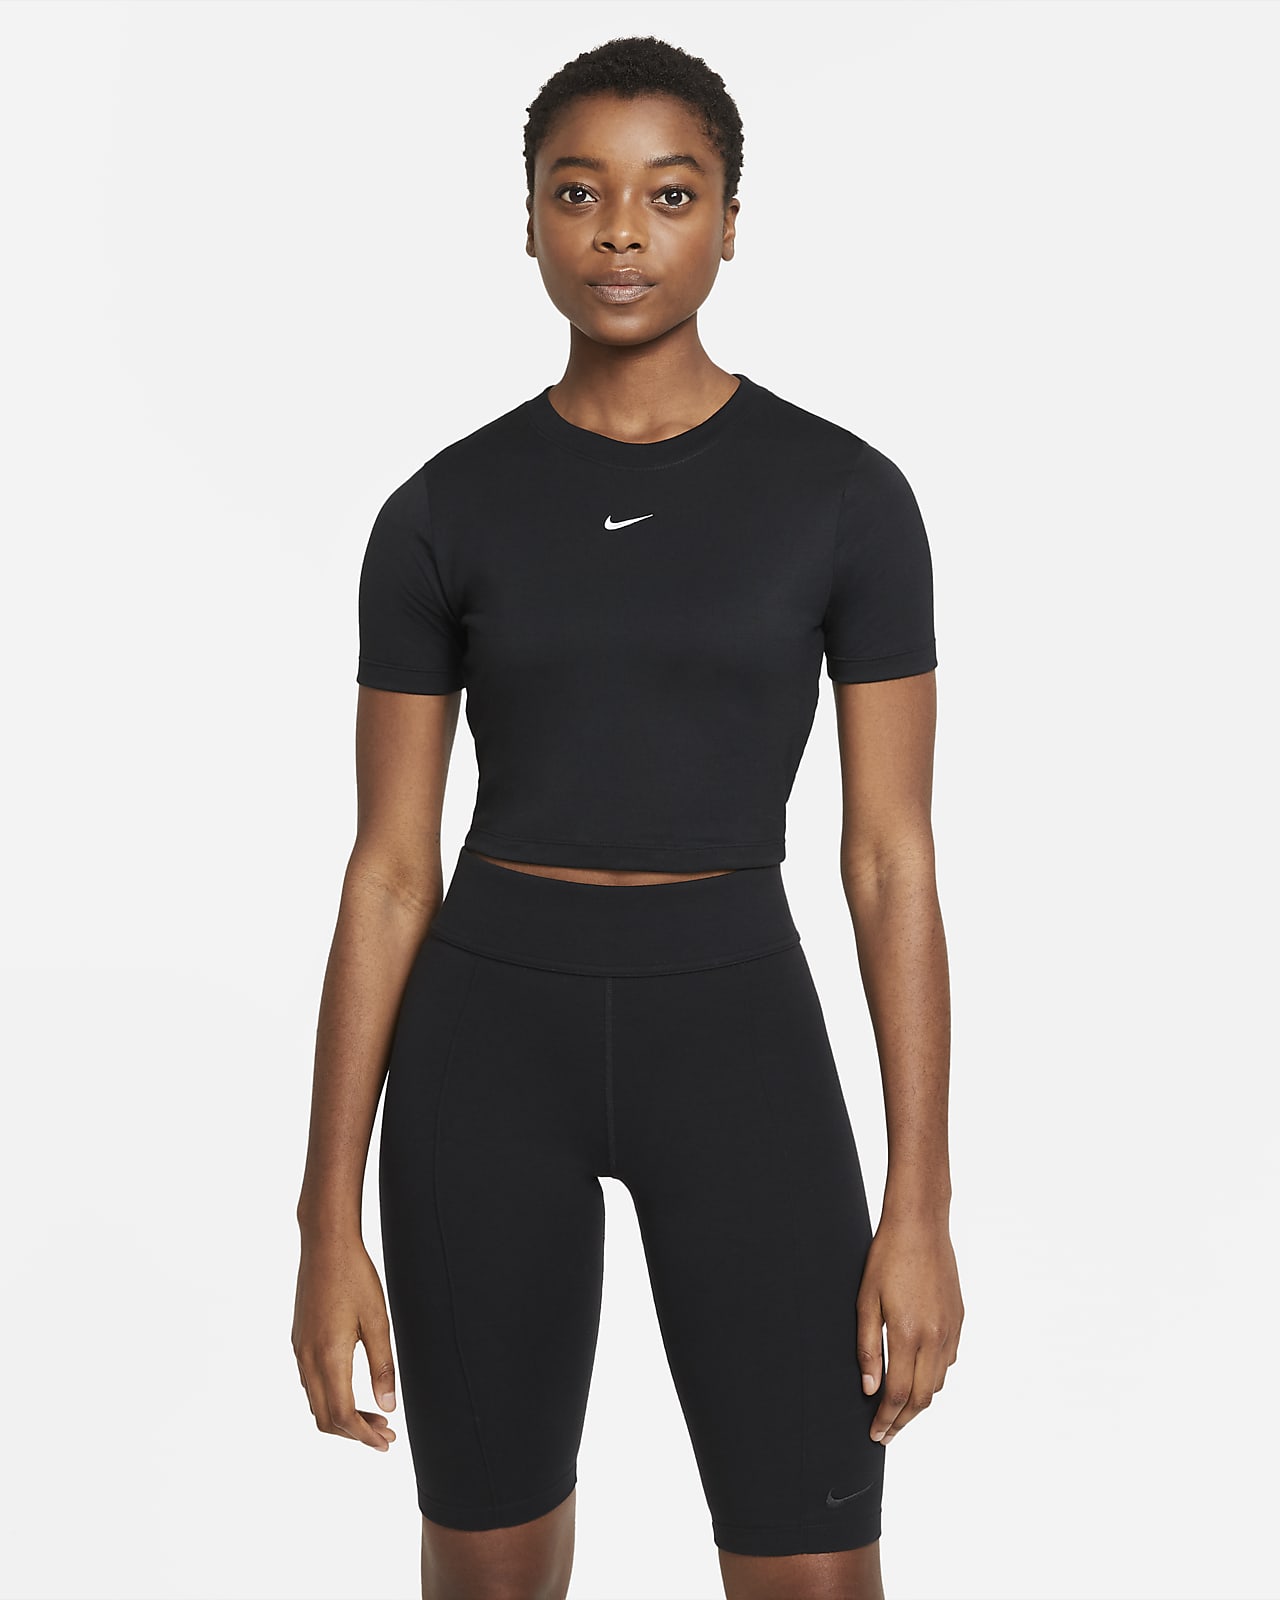 Sportswear Essential Crop Nike.com